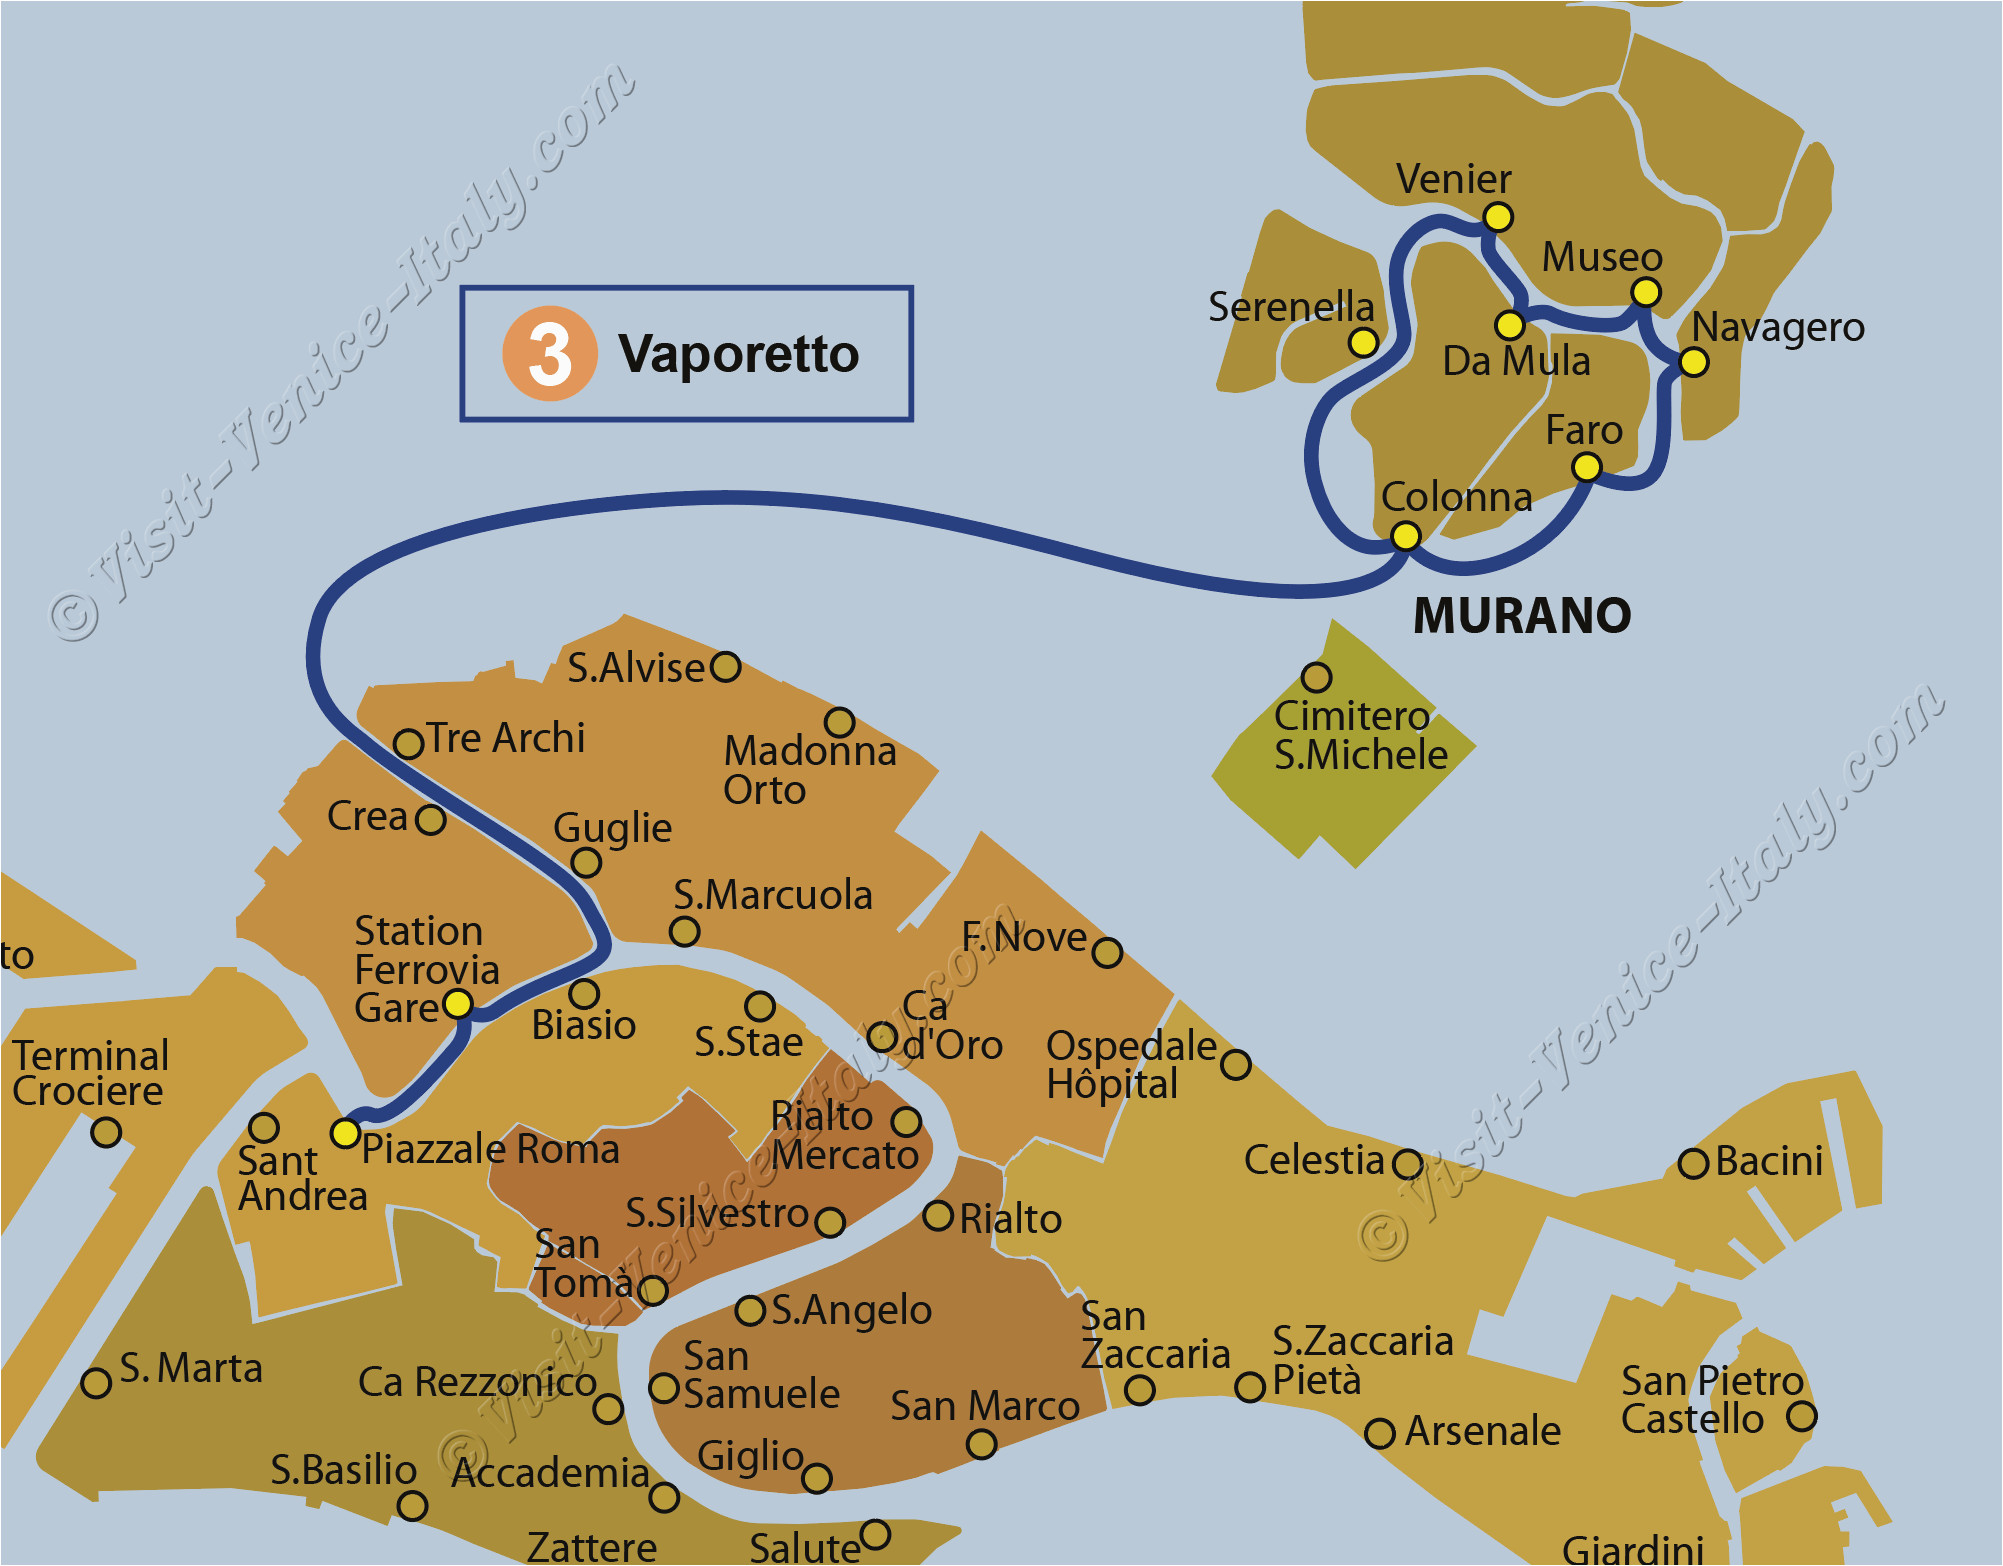 transport vaporetto waterbus bus lines maps venice italy